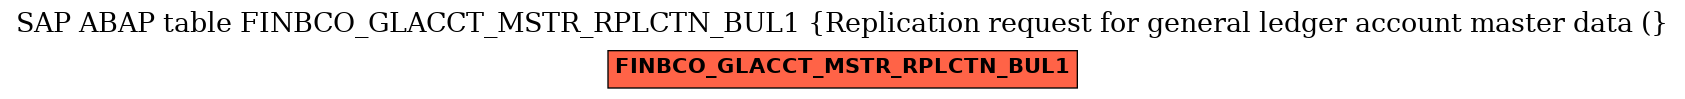 E-R Diagram for table FINBCO_GLACCT_MSTR_RPLCTN_BUL1 (Replication request for general ledger account master data ()